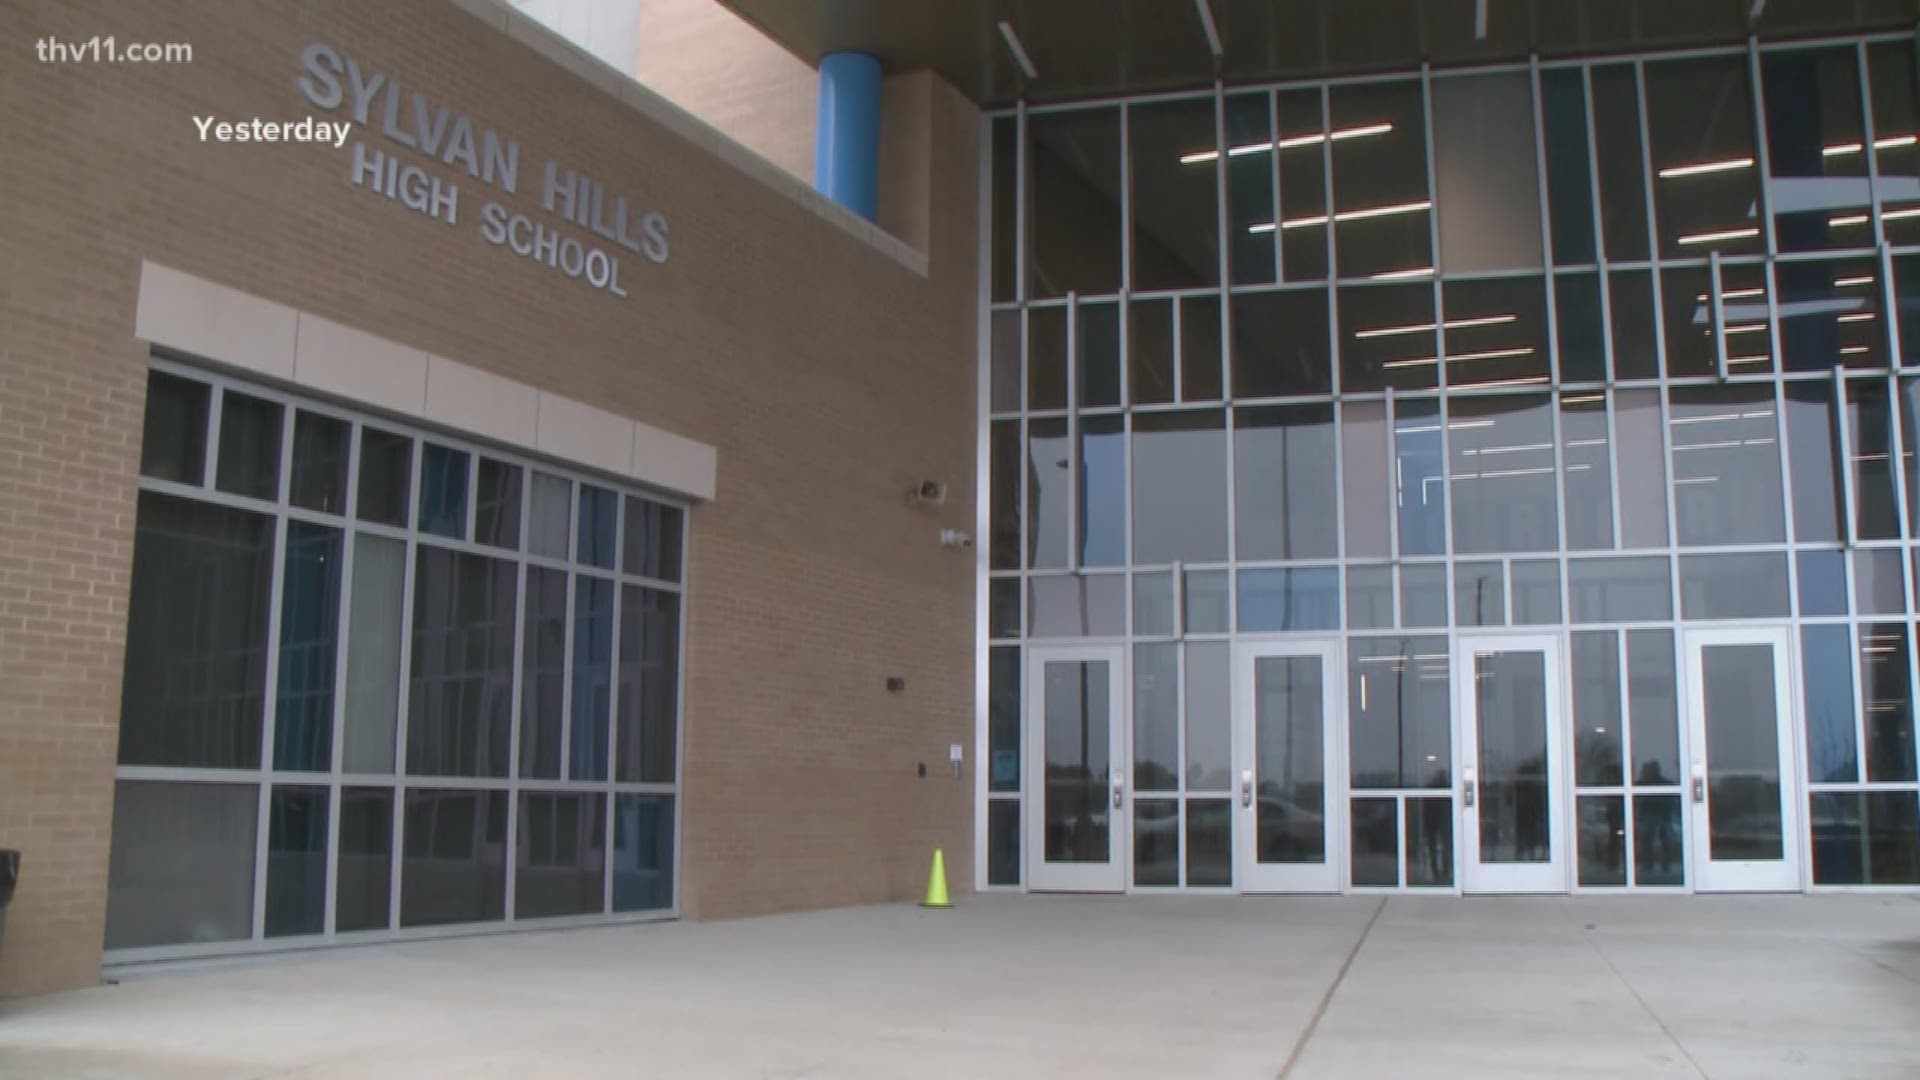 Another threat shuts down Sylvan Hills High School and Sylvan Hills' North Campus today.